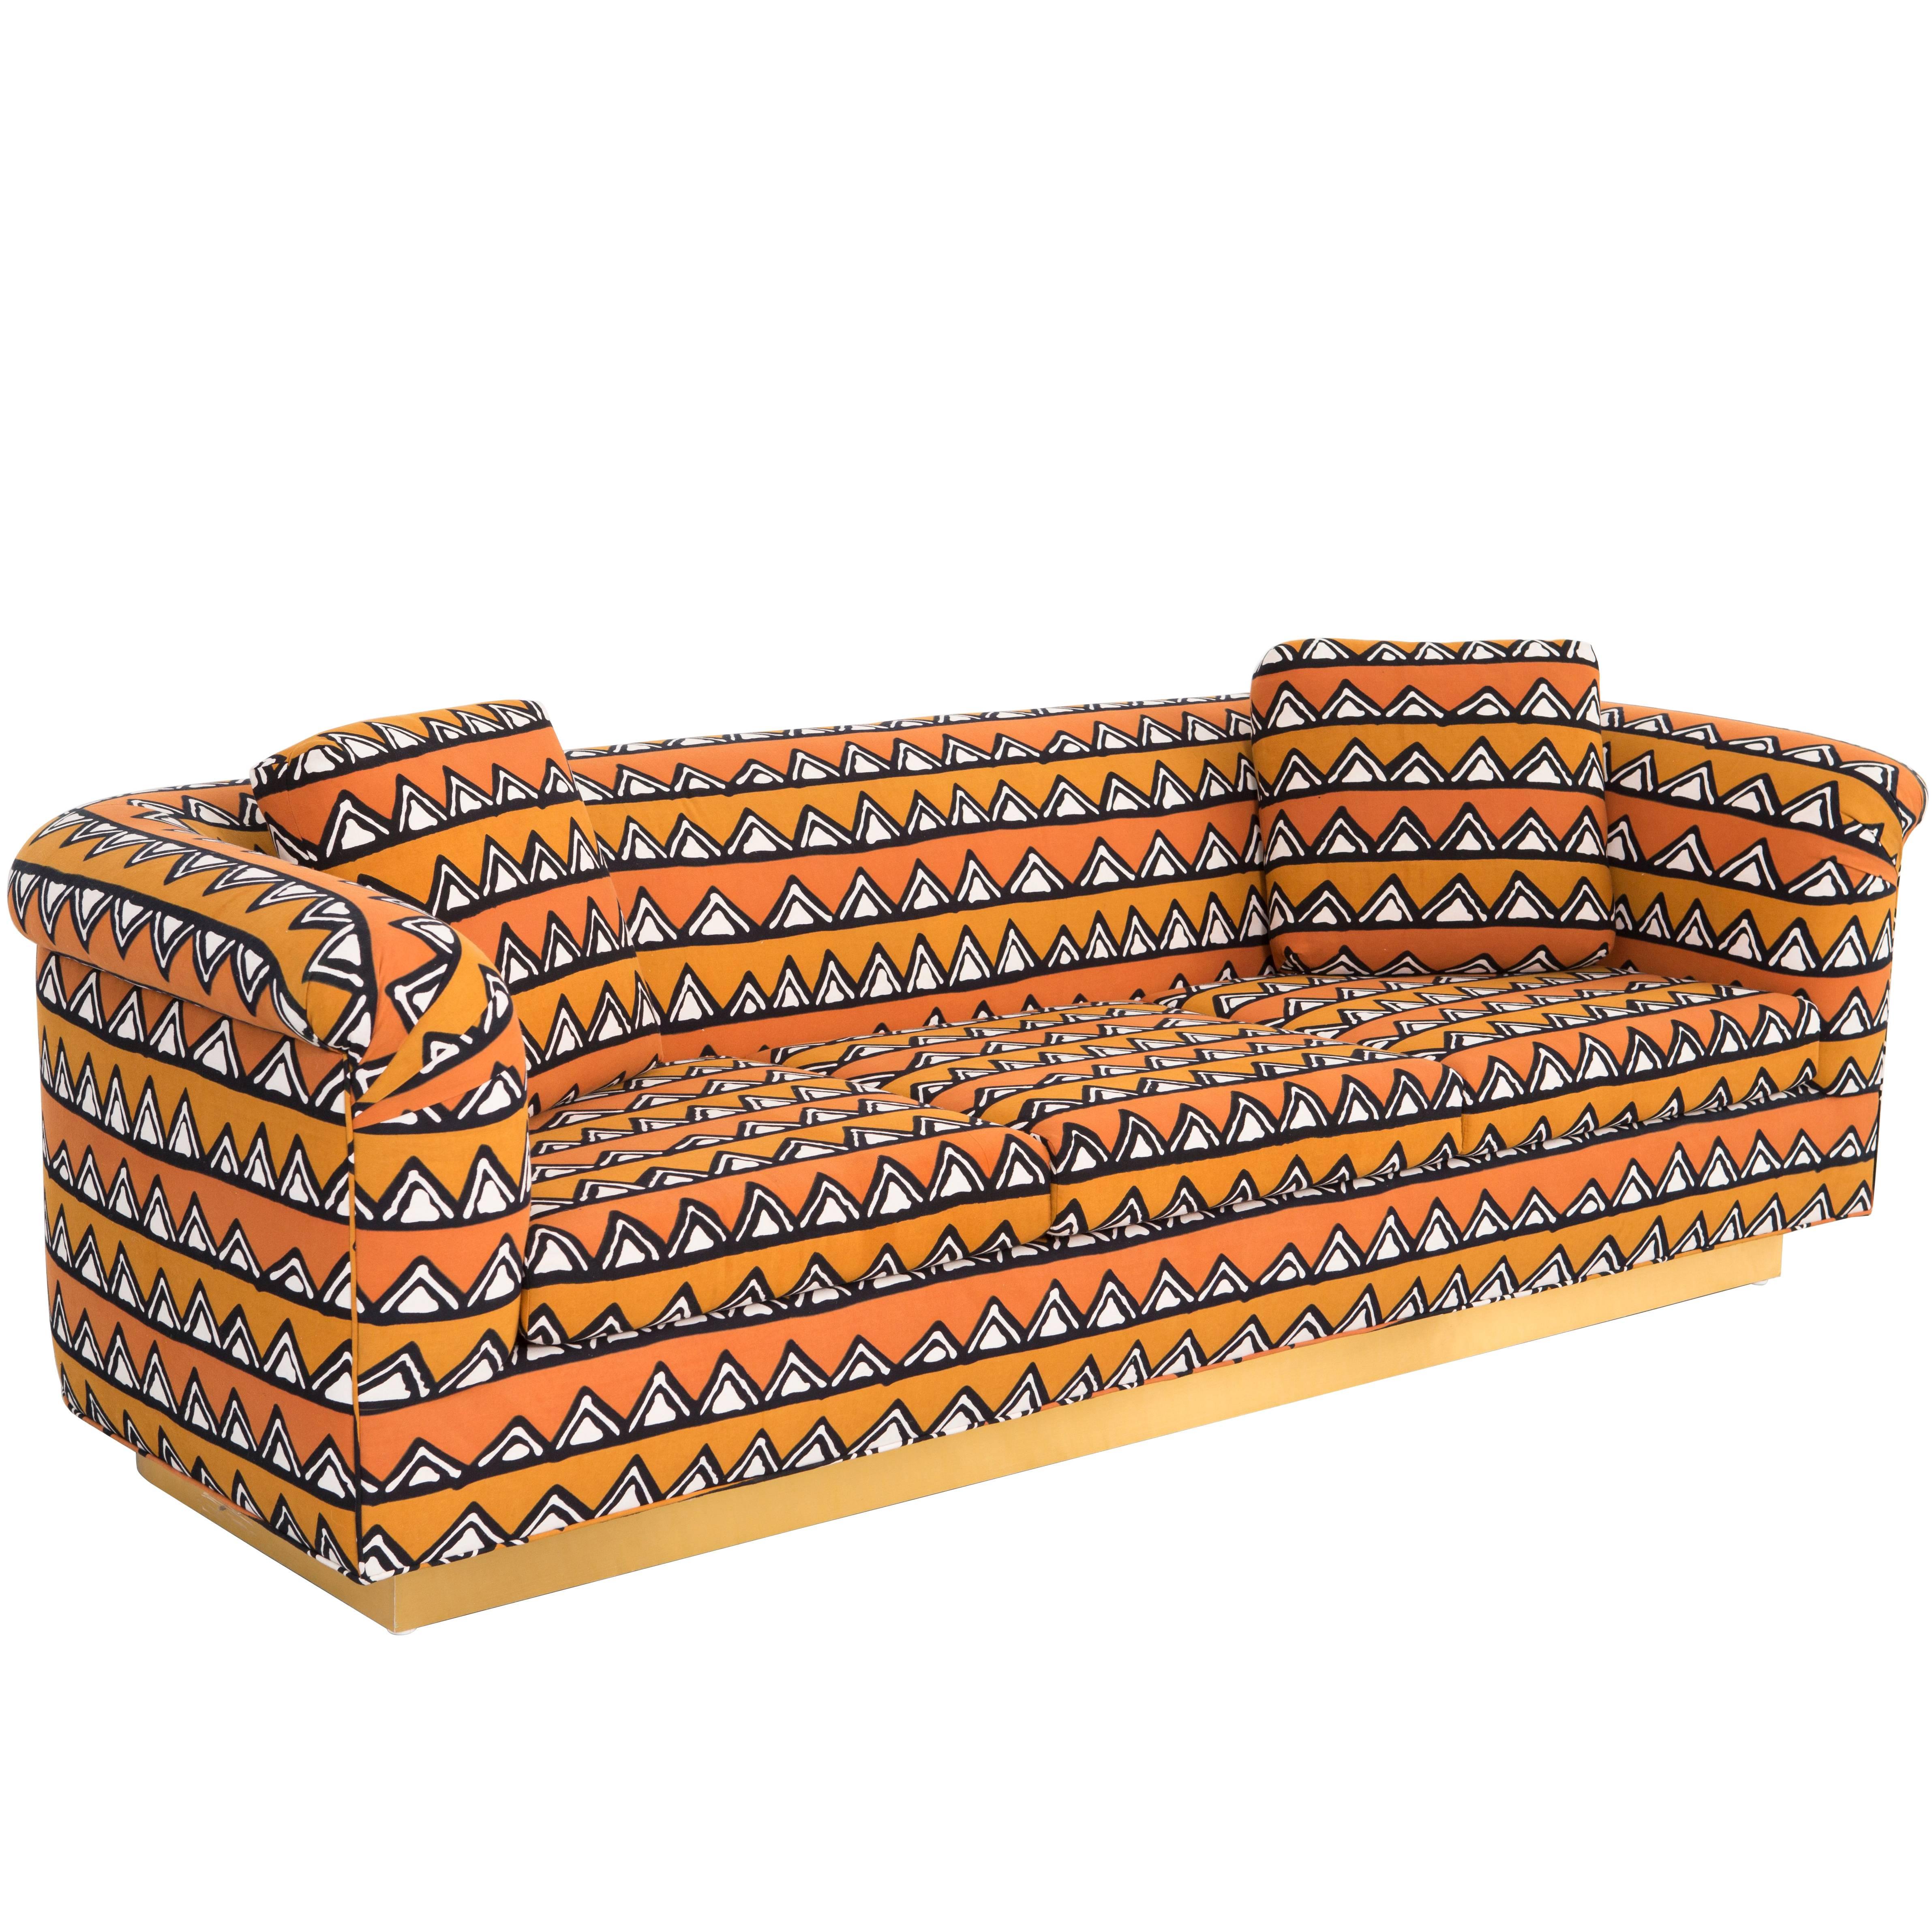  Rounded Barrel Back Brass Platform Sofa Reupholstered in African Mud Cloth  For Sale